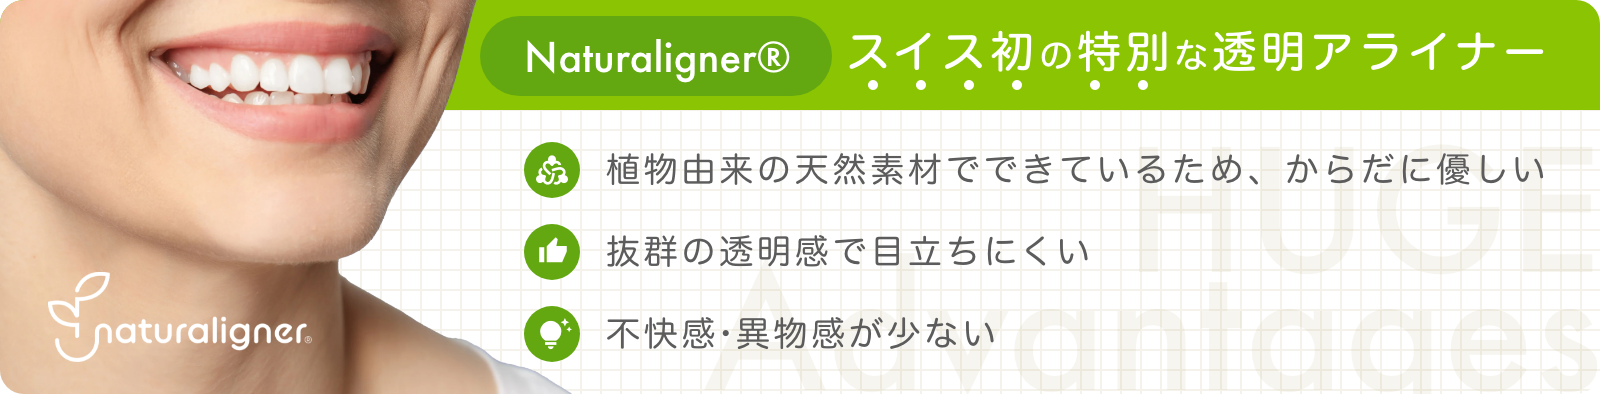 Naturaligner®、日本初の特別な透明アライナー